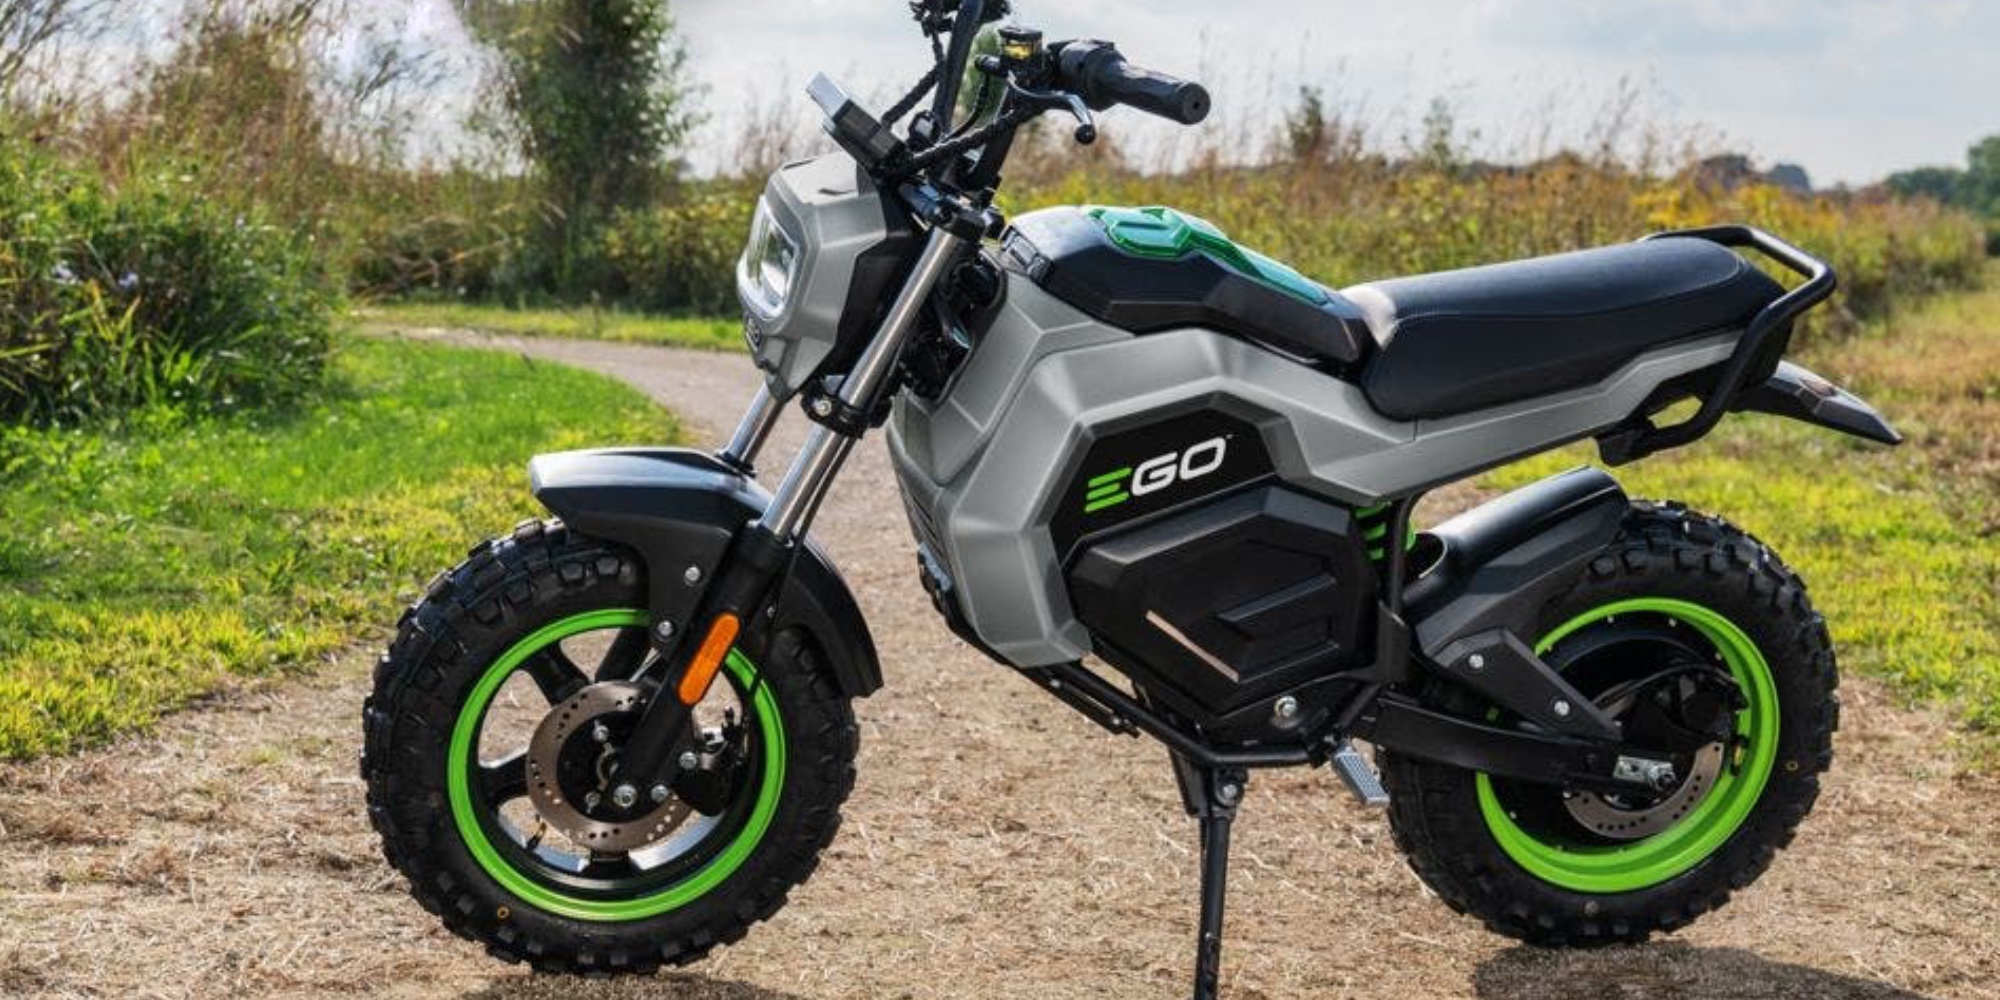 EGO Launched a Battery-Powered Mini Dirt Bike